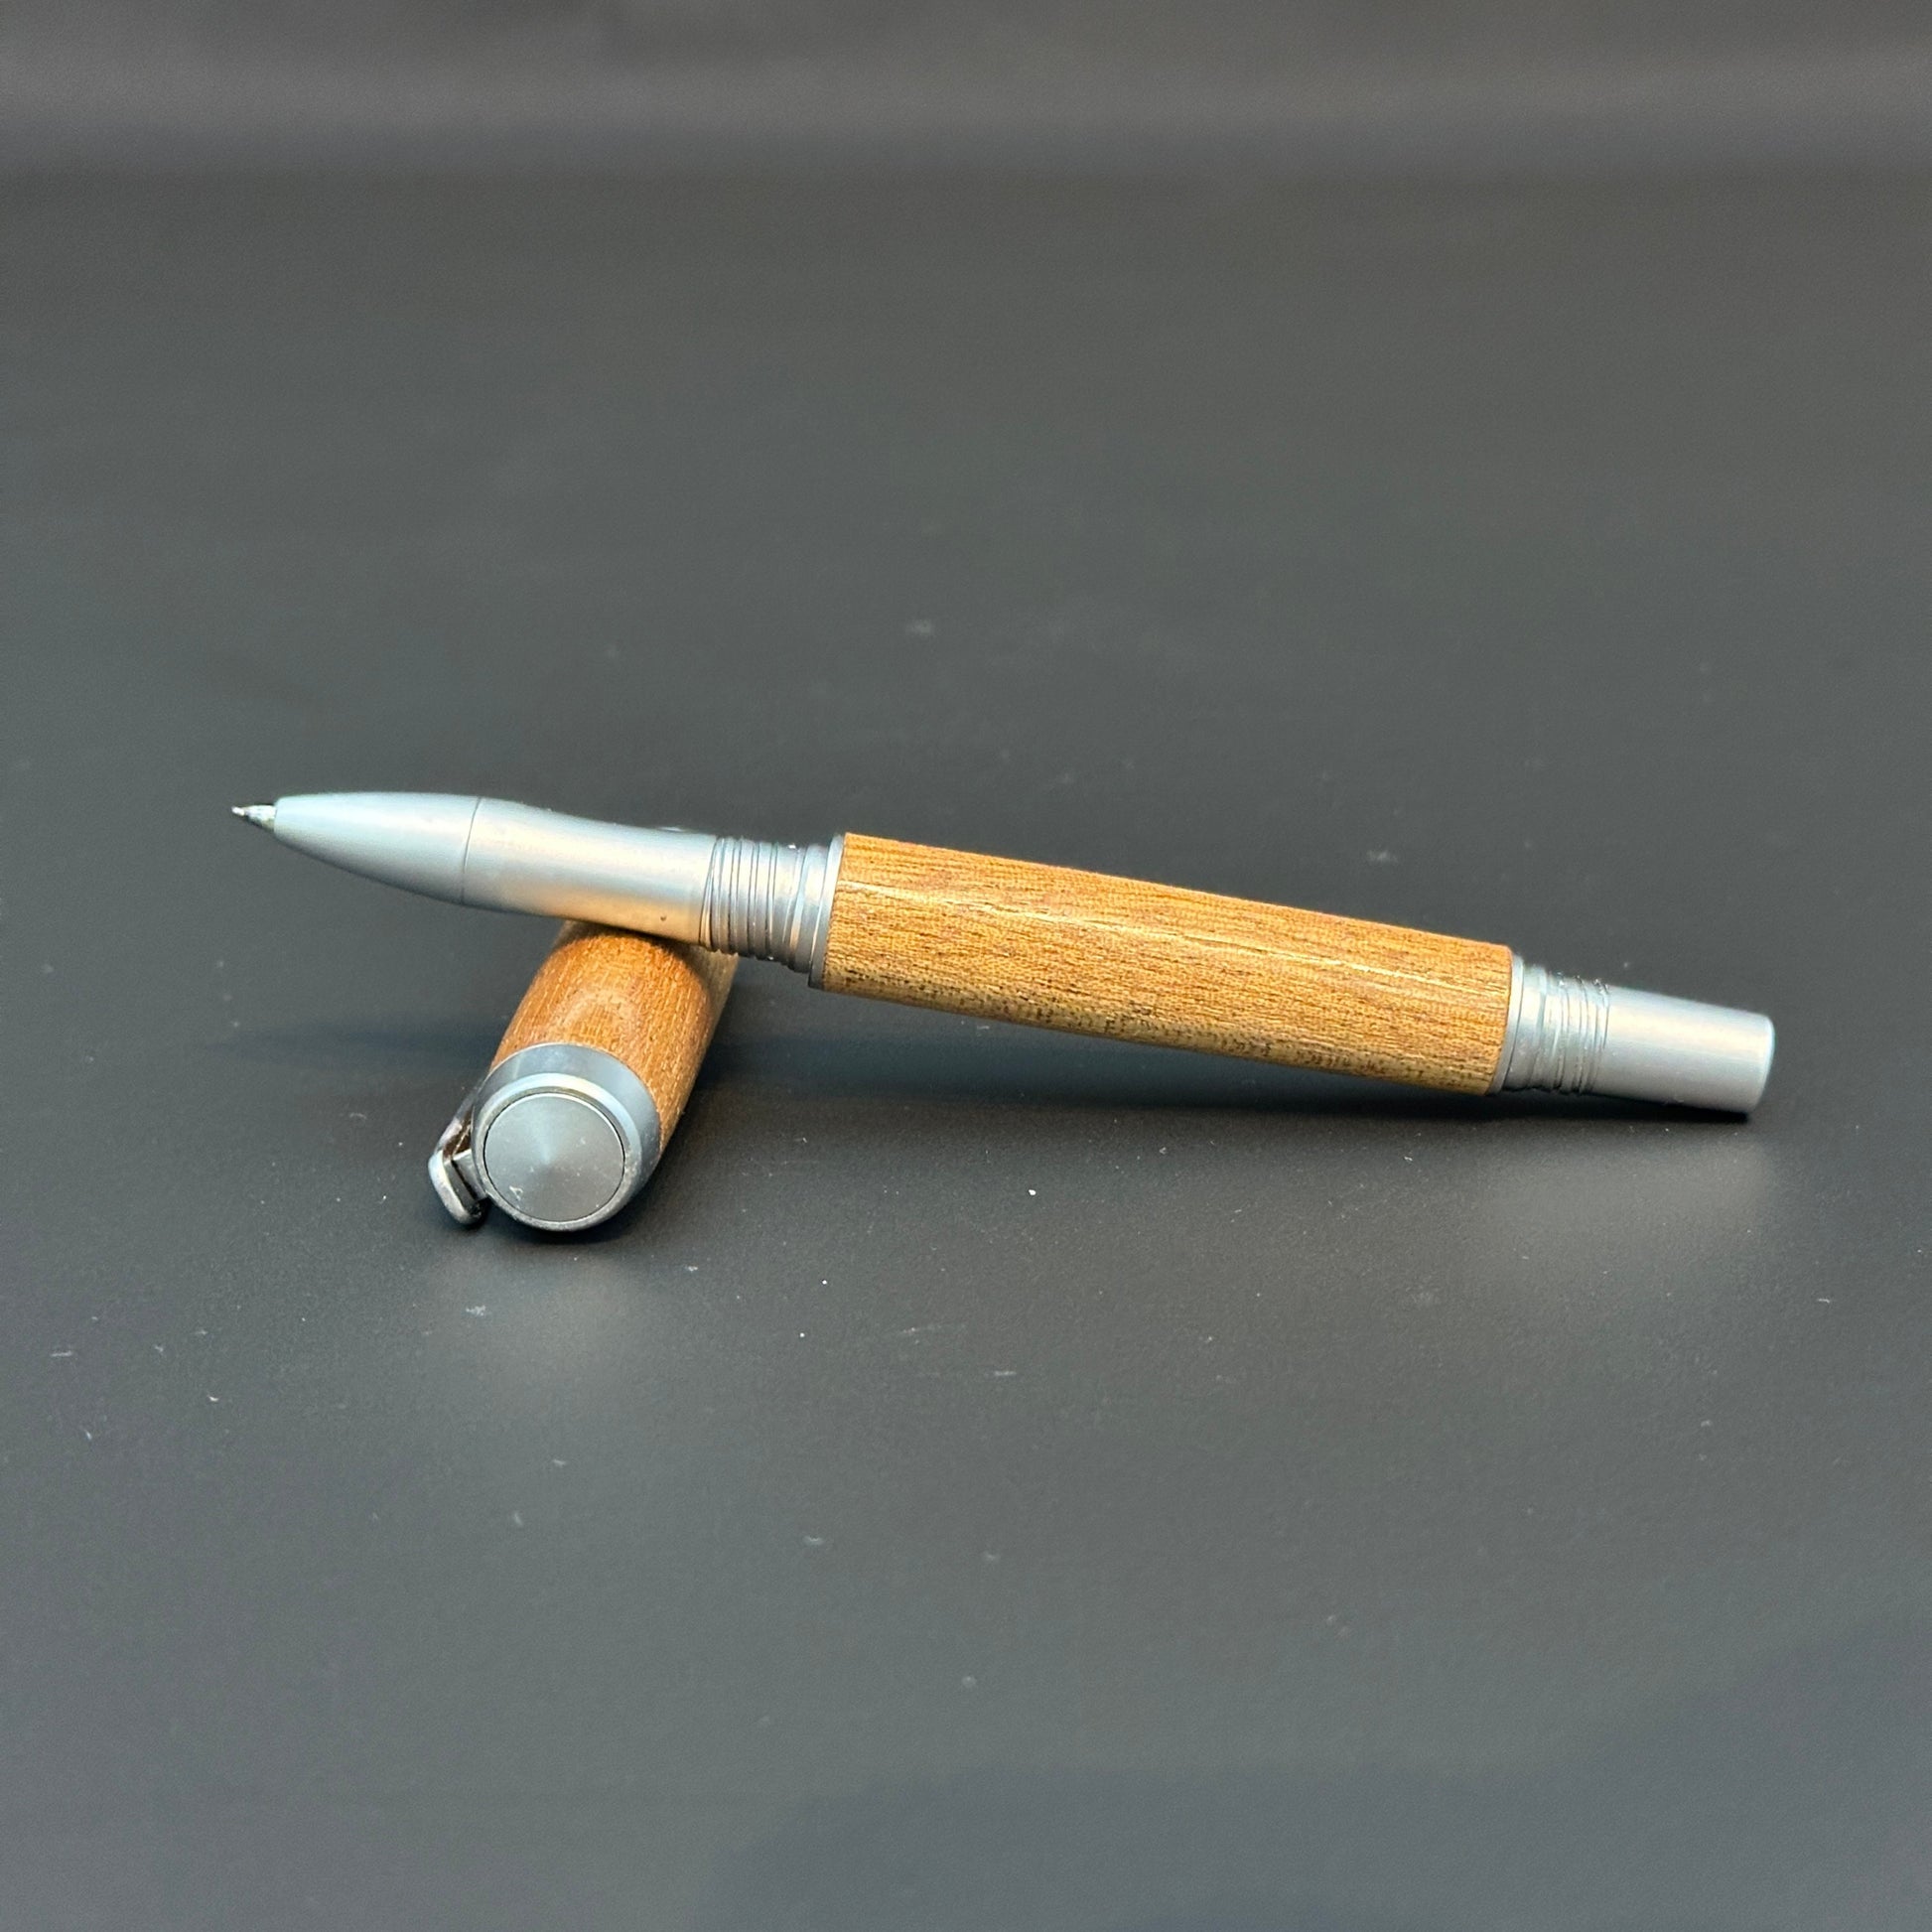 Mahogany Wooden Rollerball Pen metalllic Satin Chrome finish - BOISWOOD